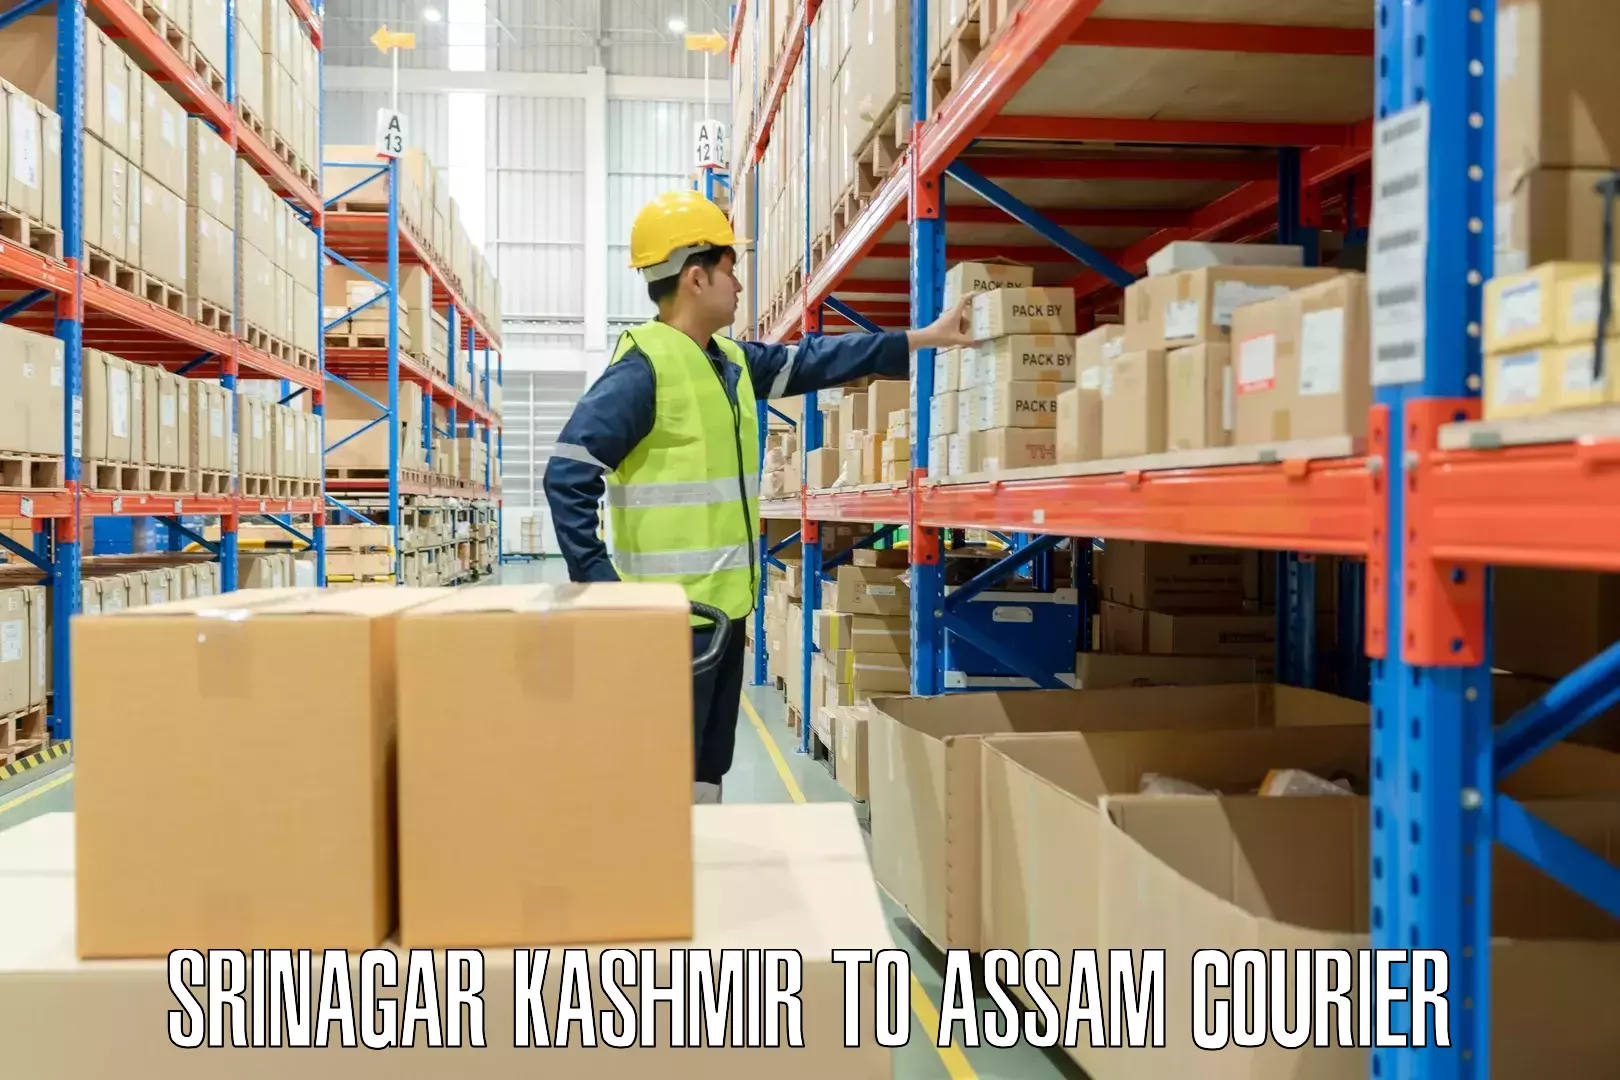 Luggage delivery app Srinagar Kashmir to Assam